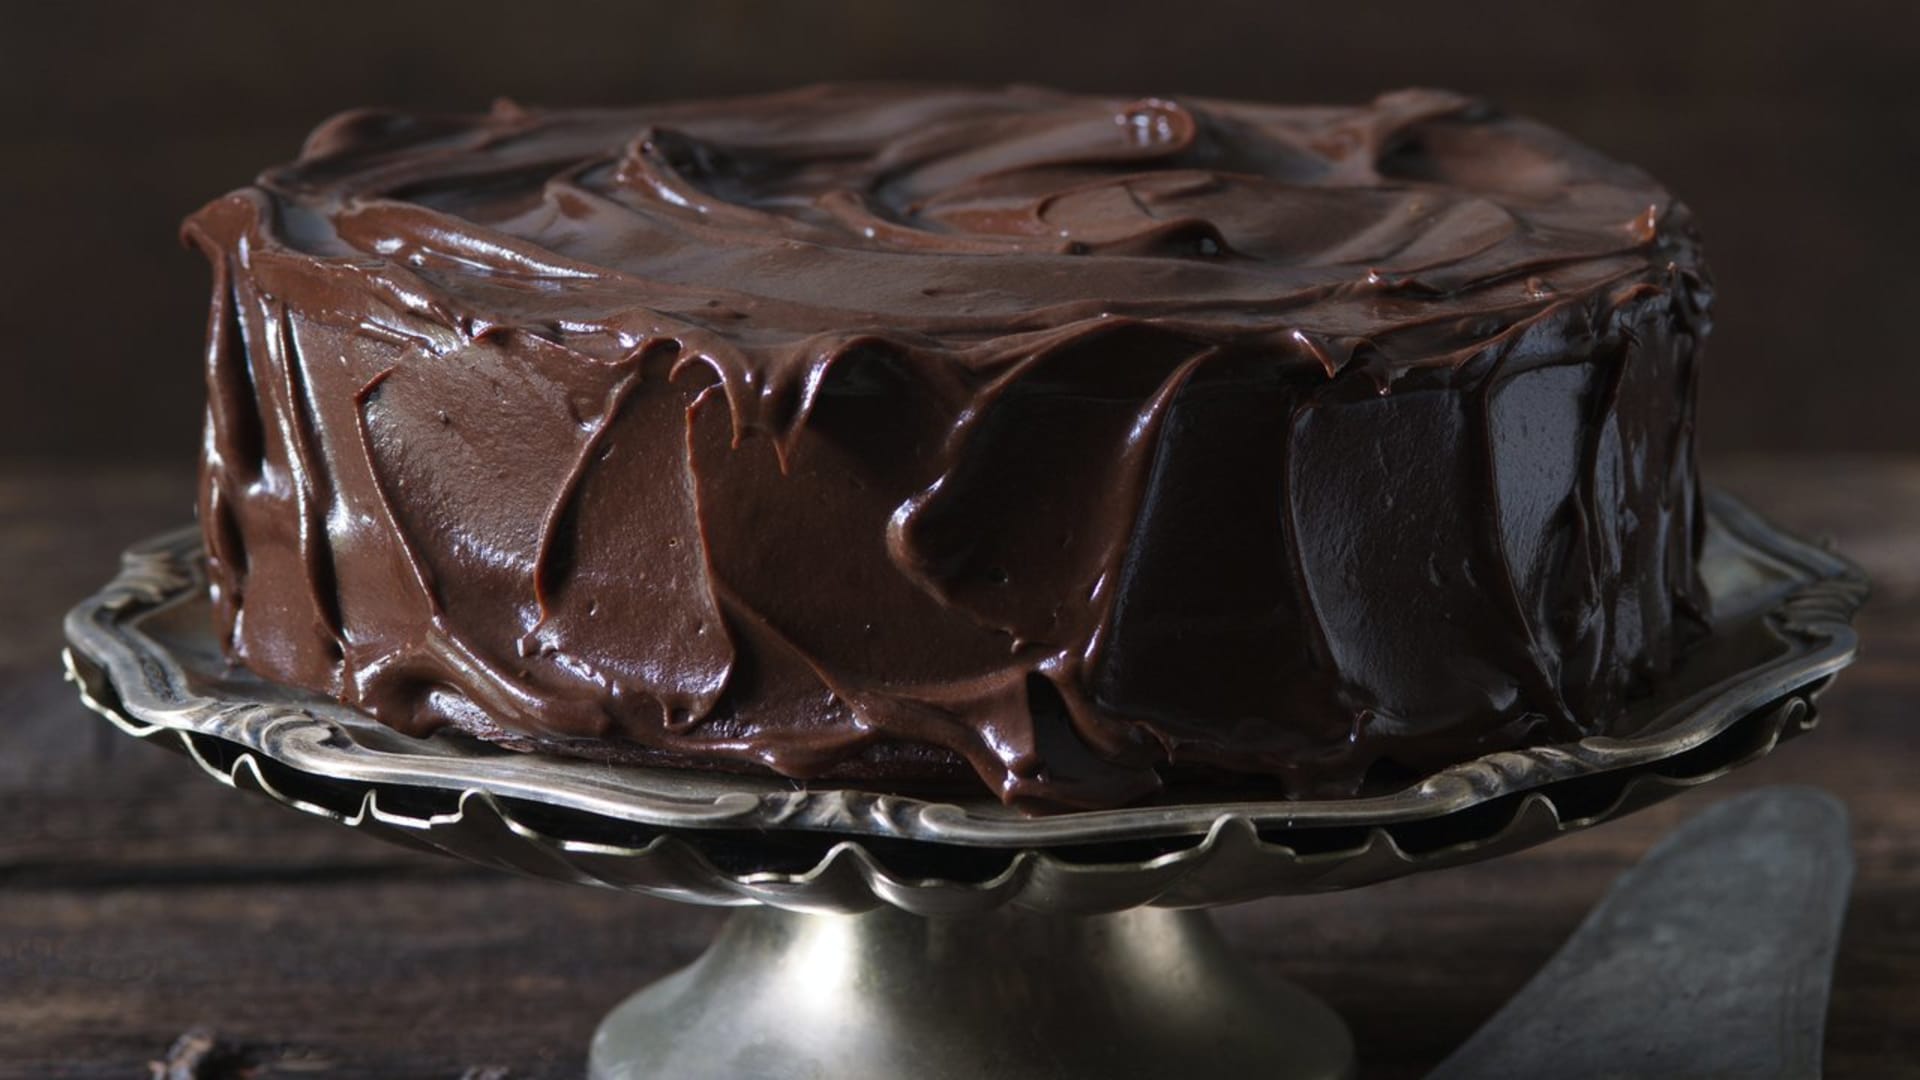 Ďáblův čokoládový dort